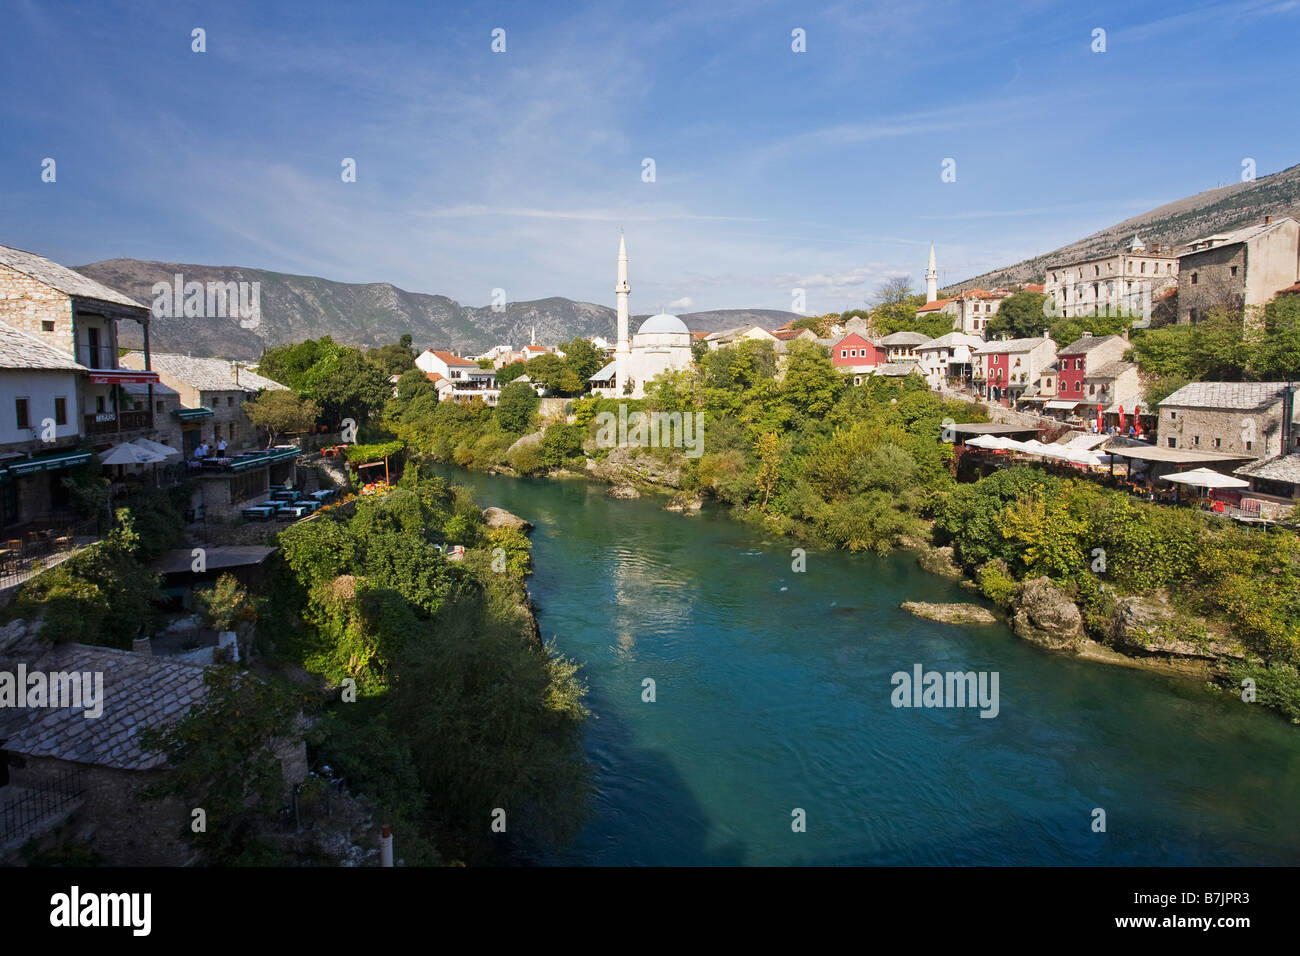 Historische Altstadt von Mostar und Fluss Neretva UNESCO-Weltkulturerbe in Bosnien Herzegowina Europa Stockfoto